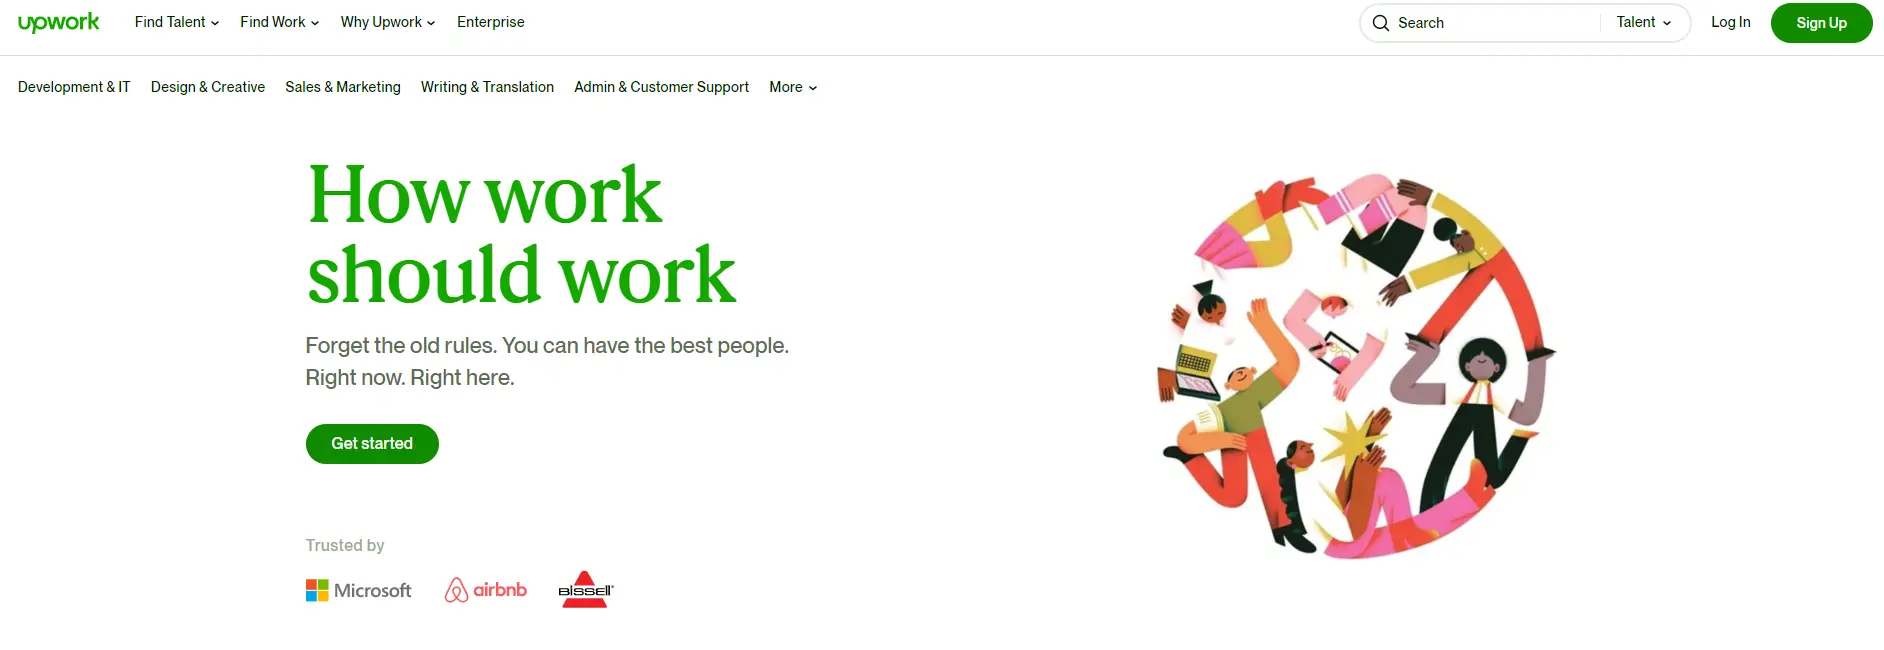 Upwork Homepage